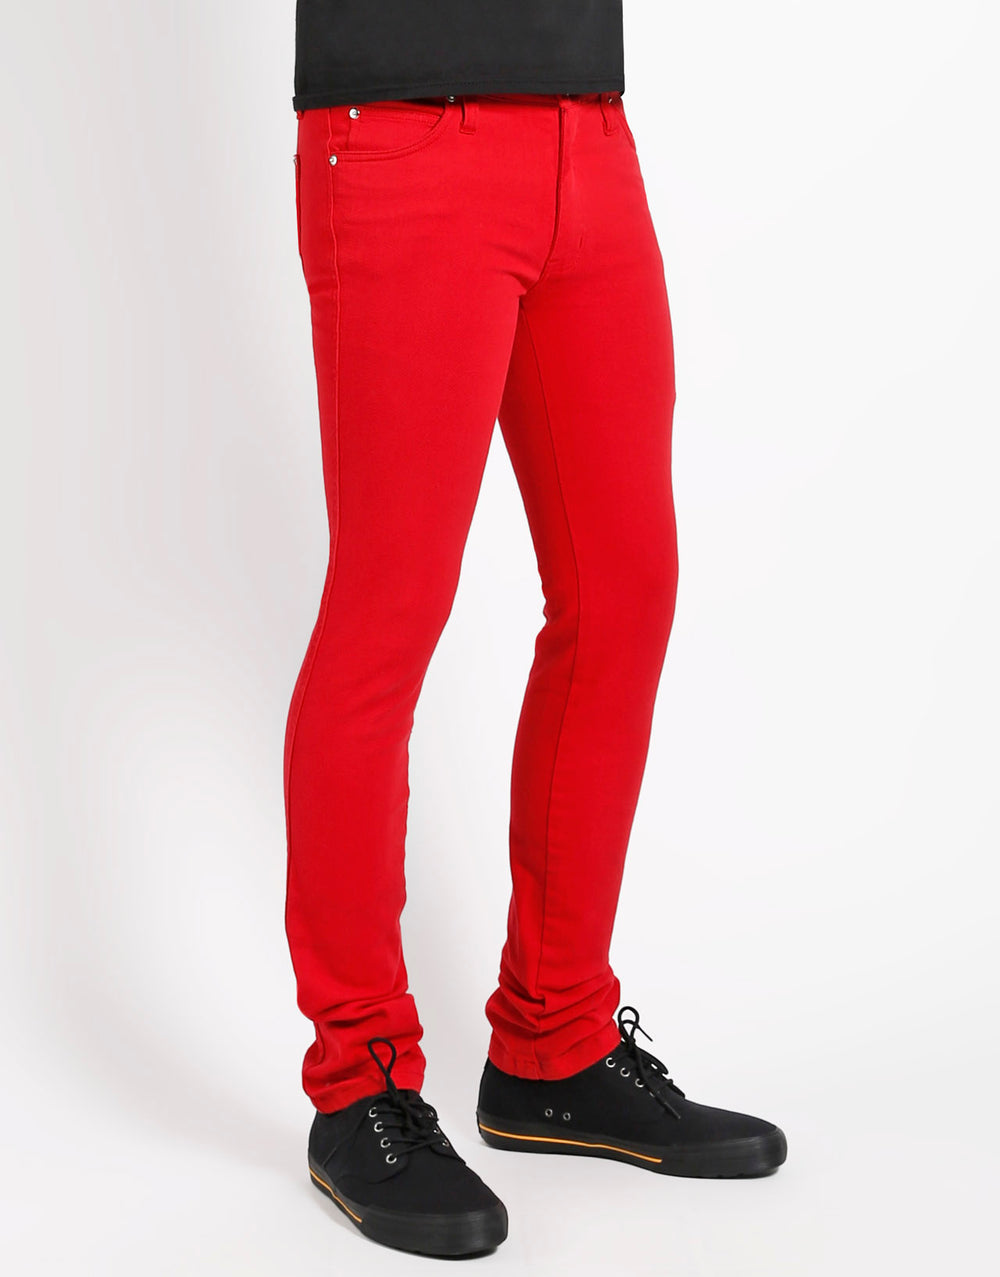 Red Skinny jeans for Men